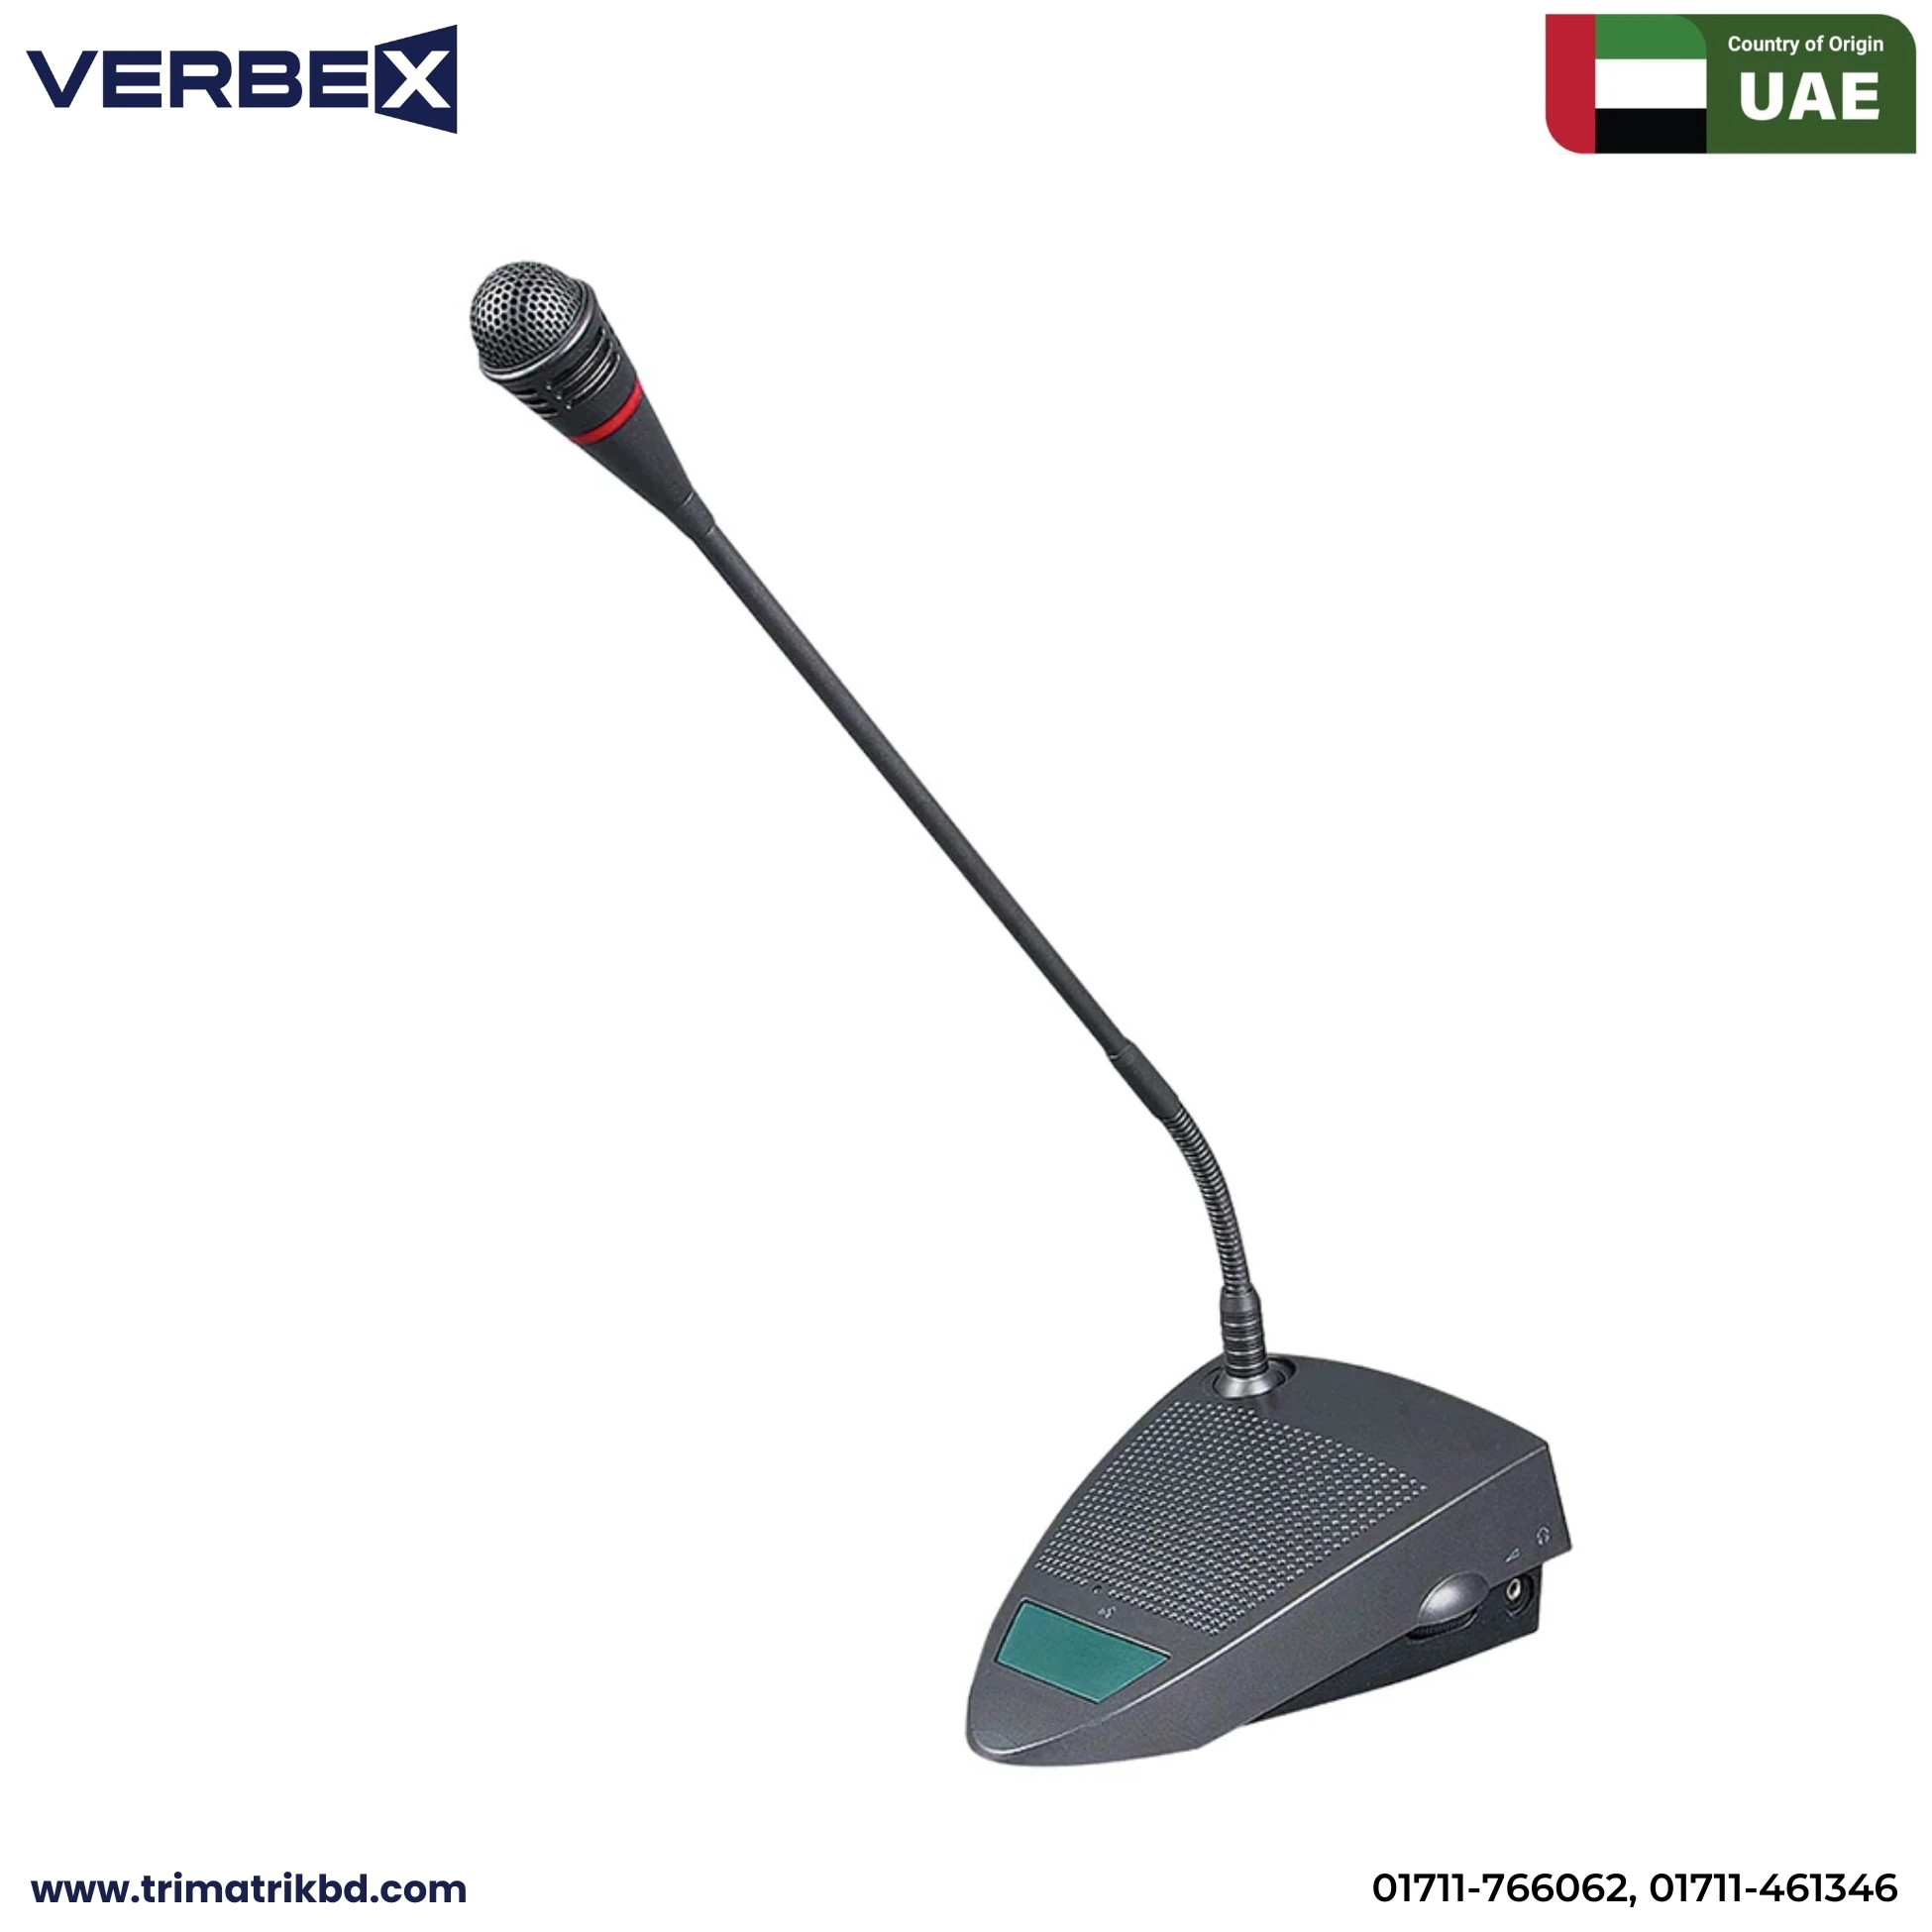 Verbex VT-801D Conference Delegates Microphone